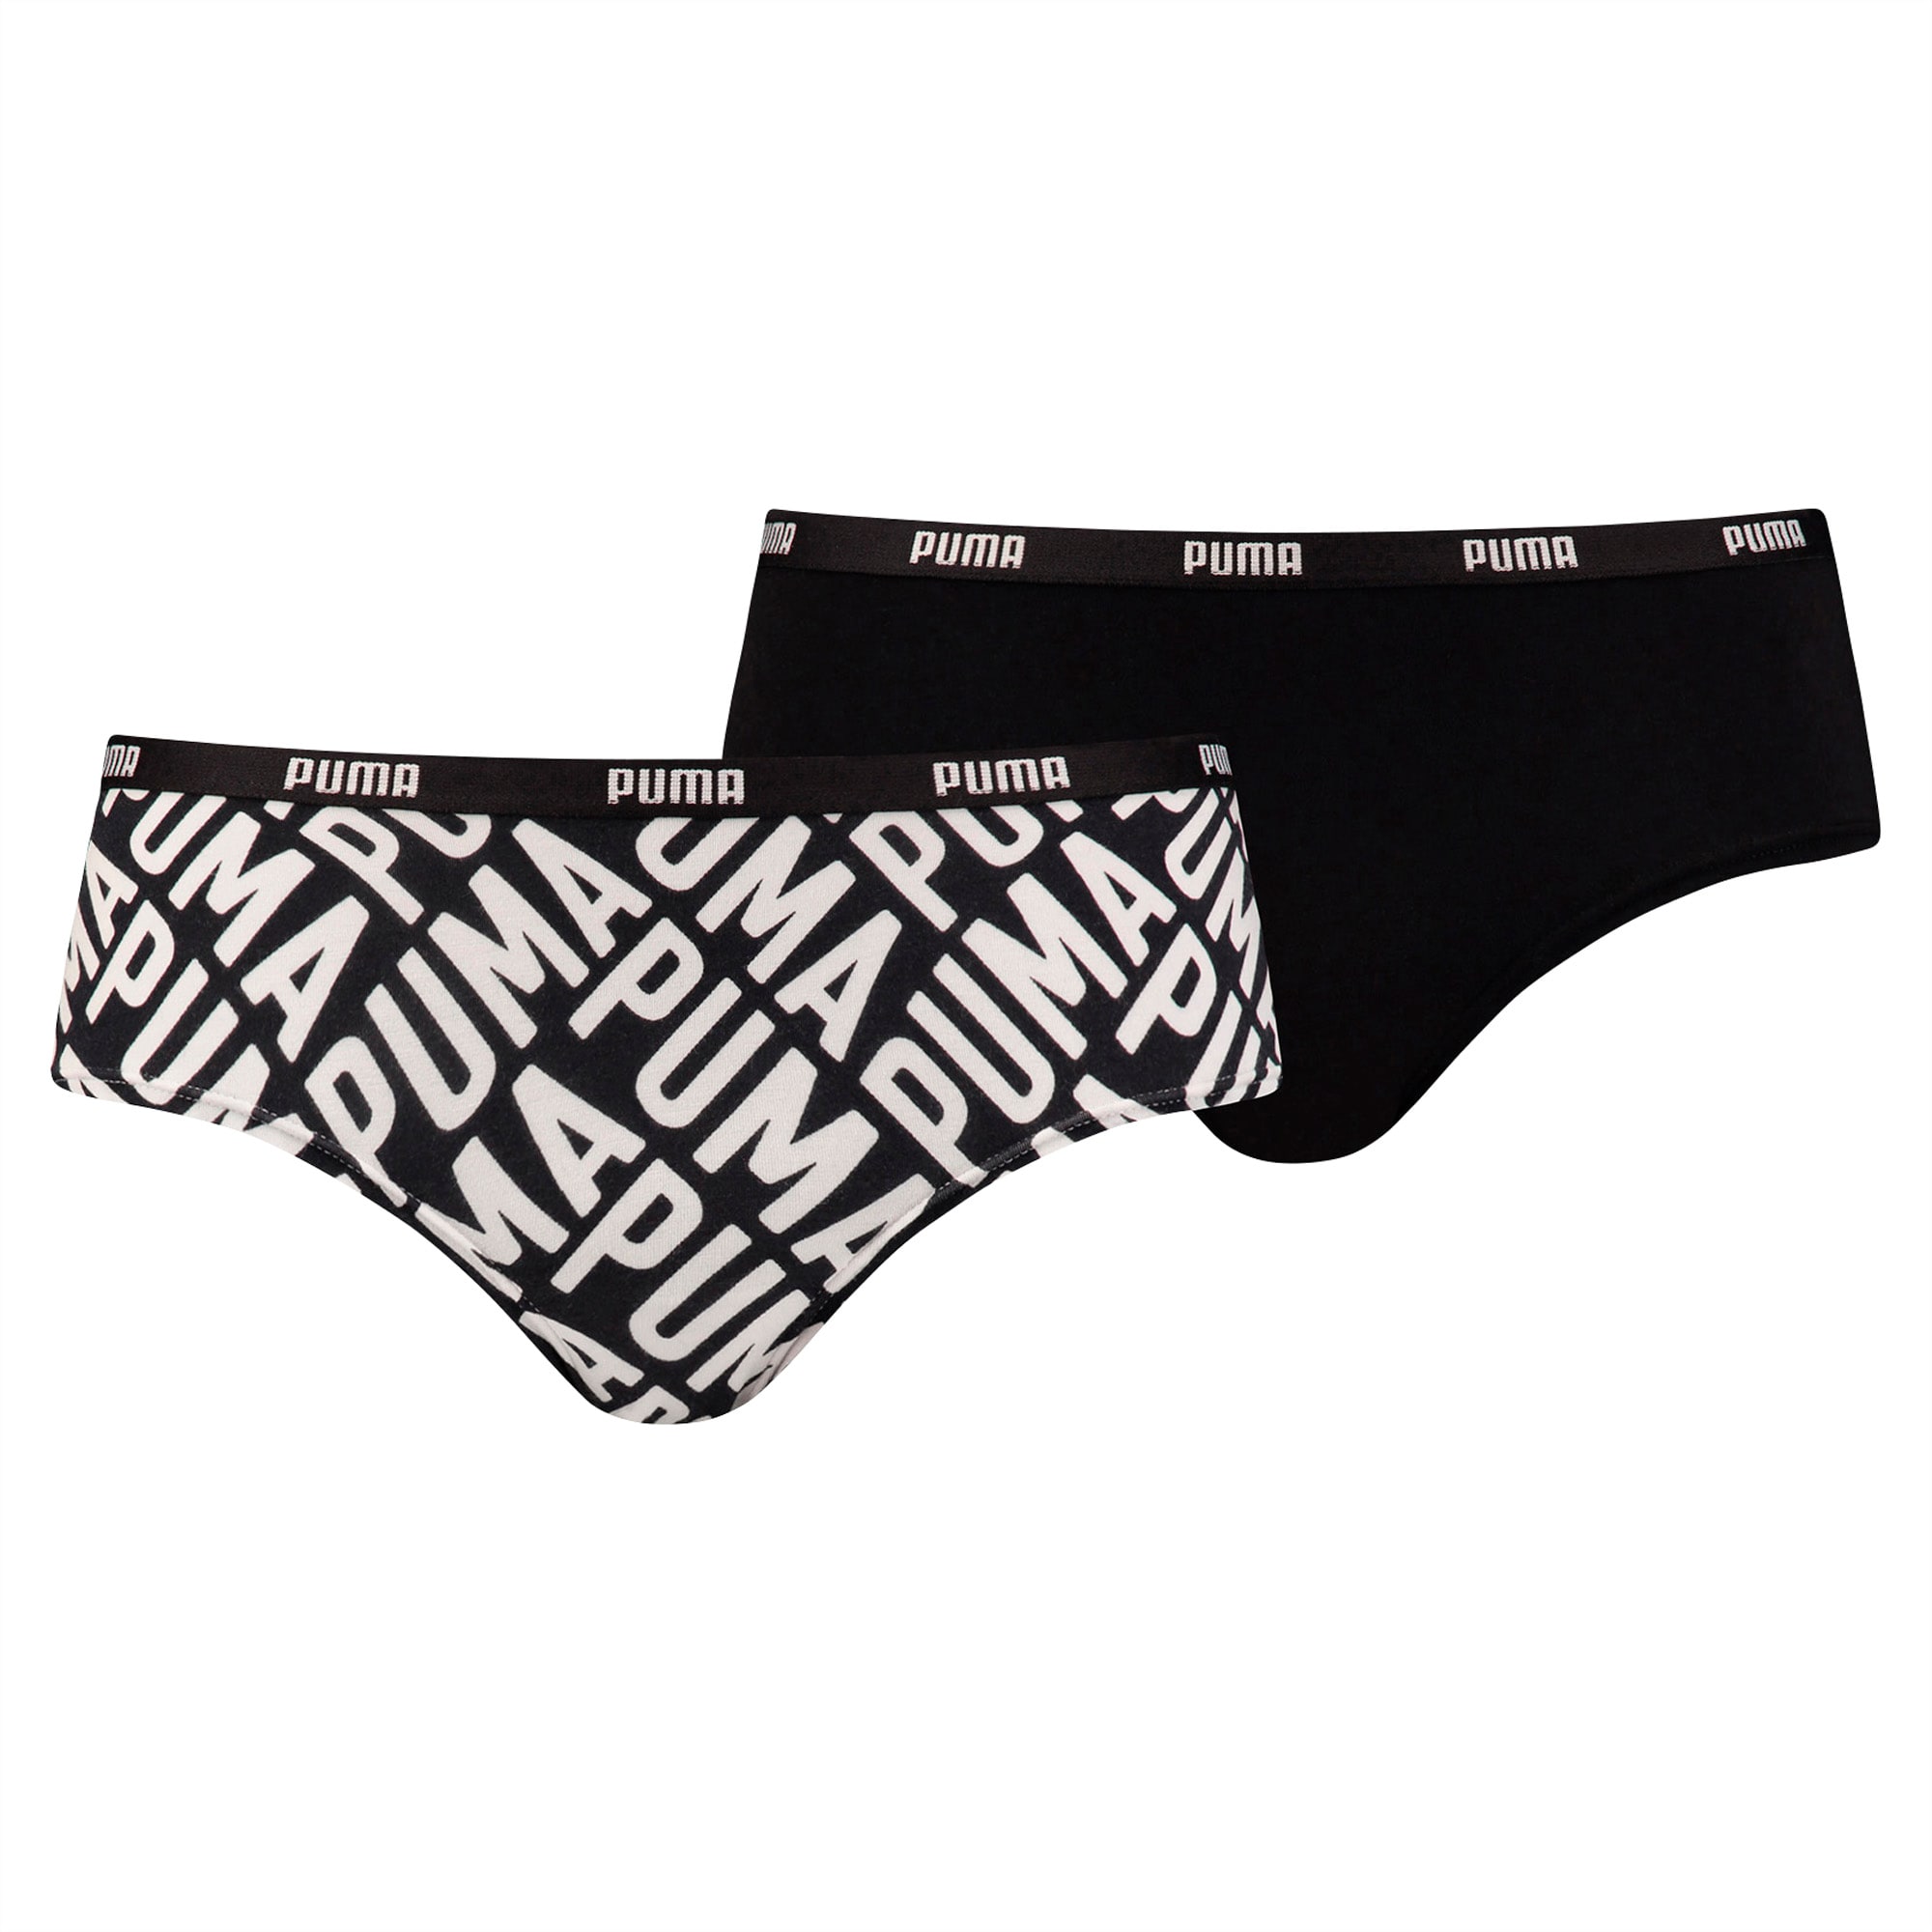 puma sports underwear